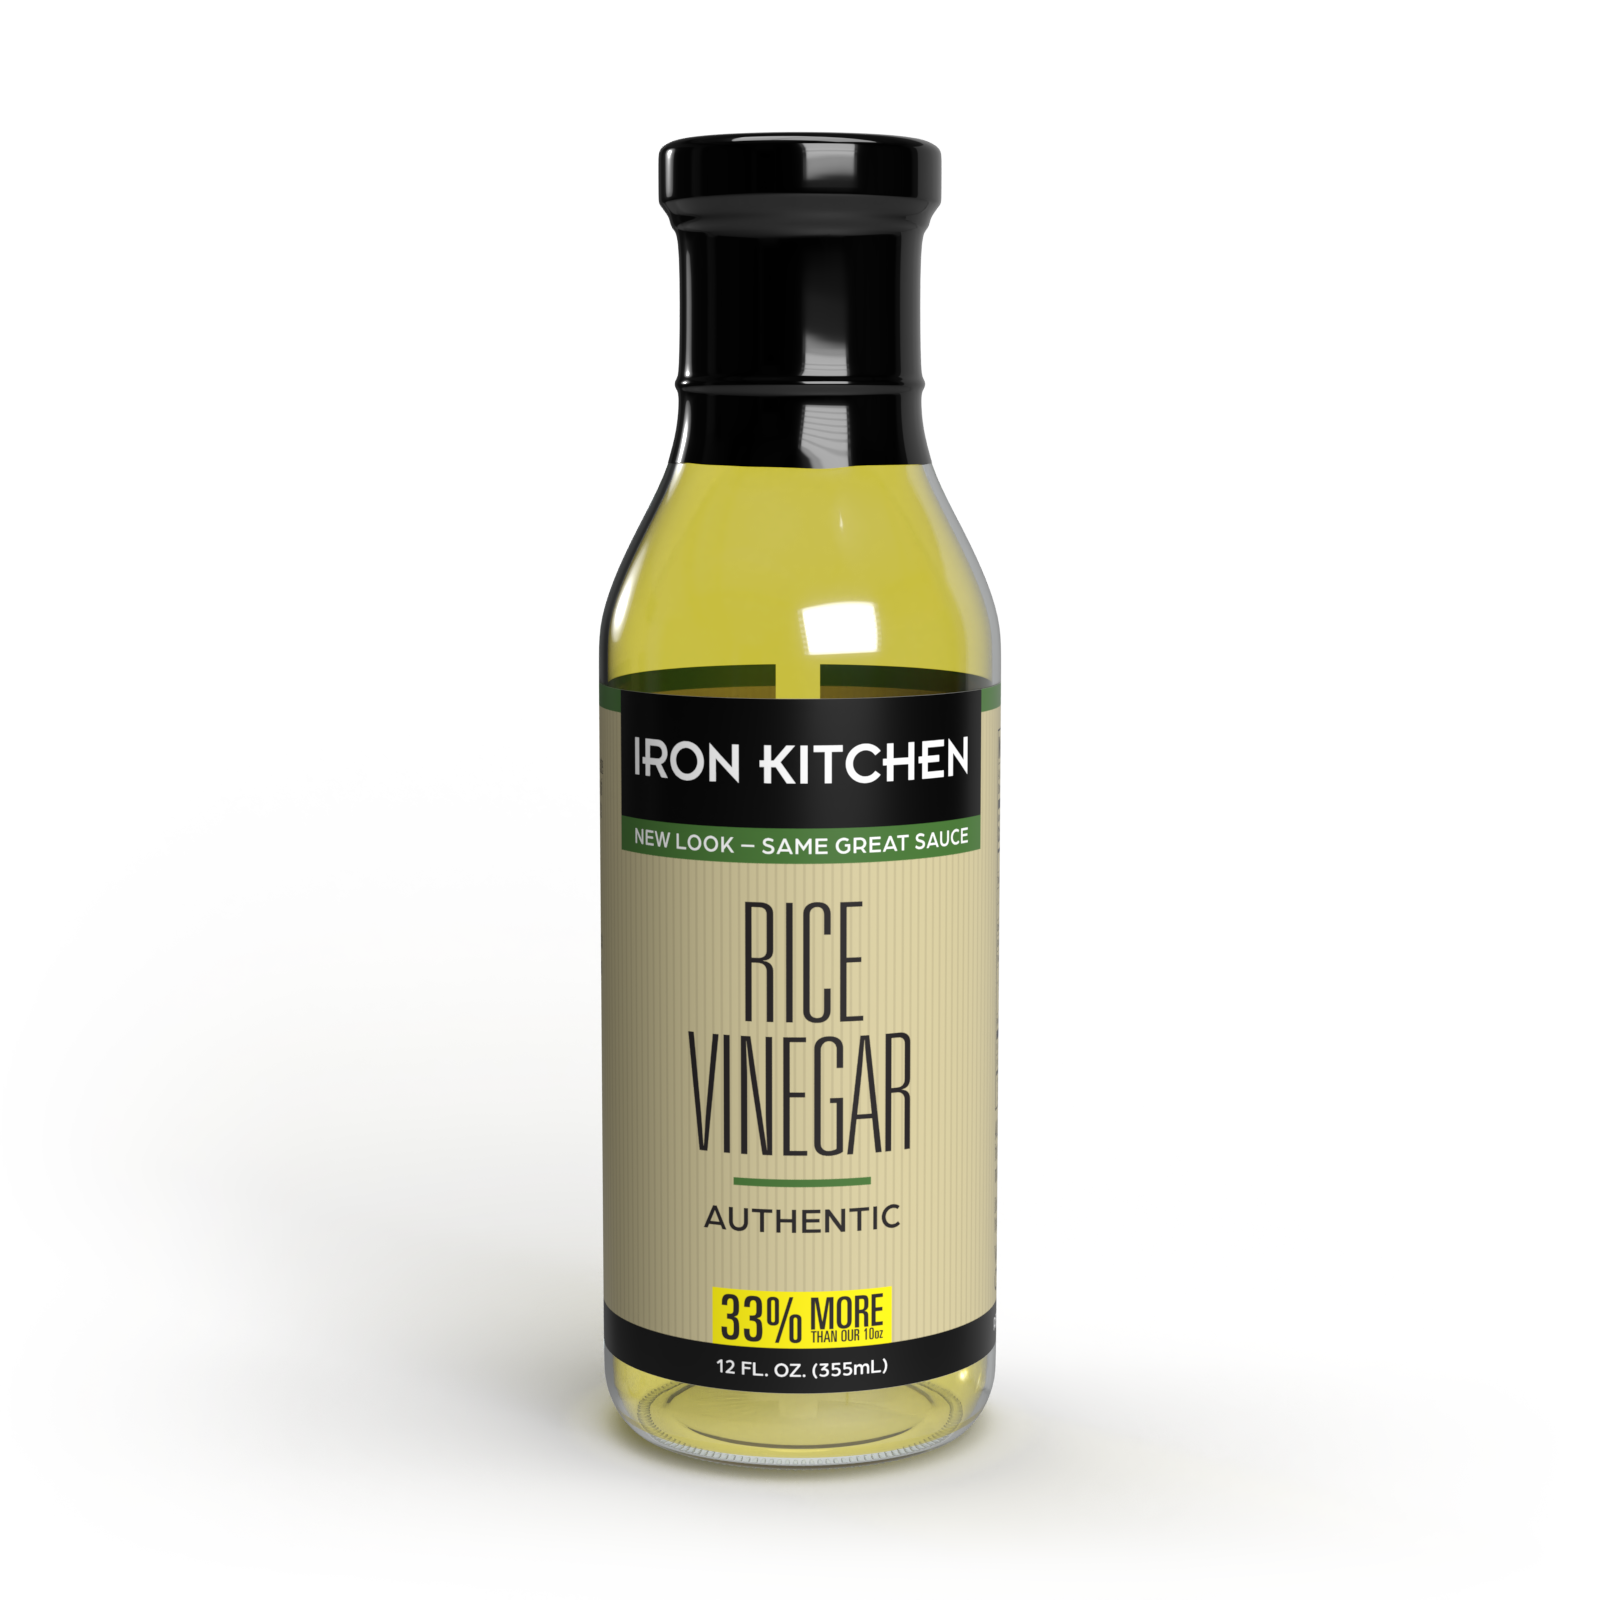 Iron Kitchen Rice Vinegar